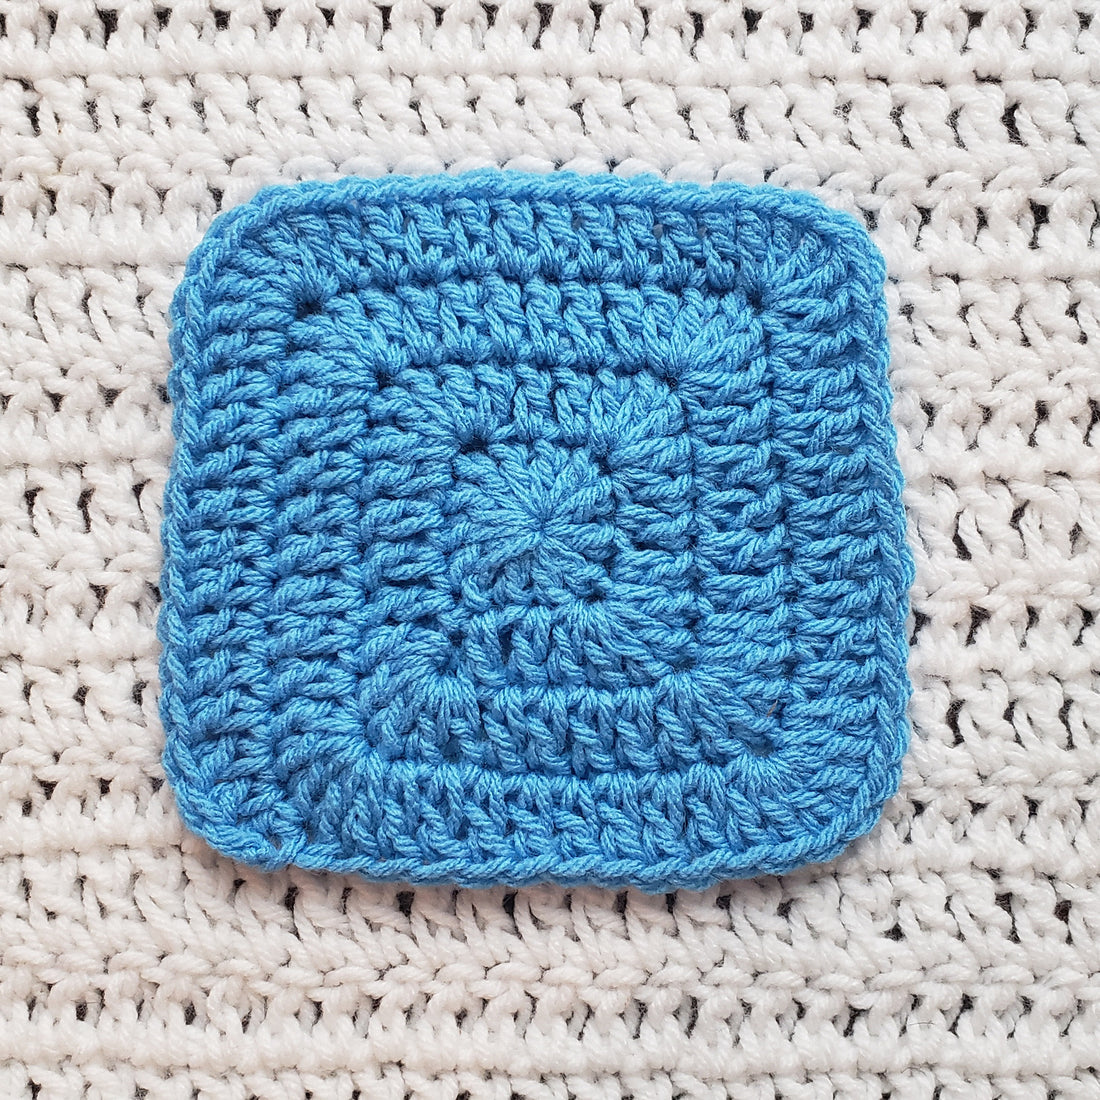 Free Crochet Pattern: Spiral Granny Square!